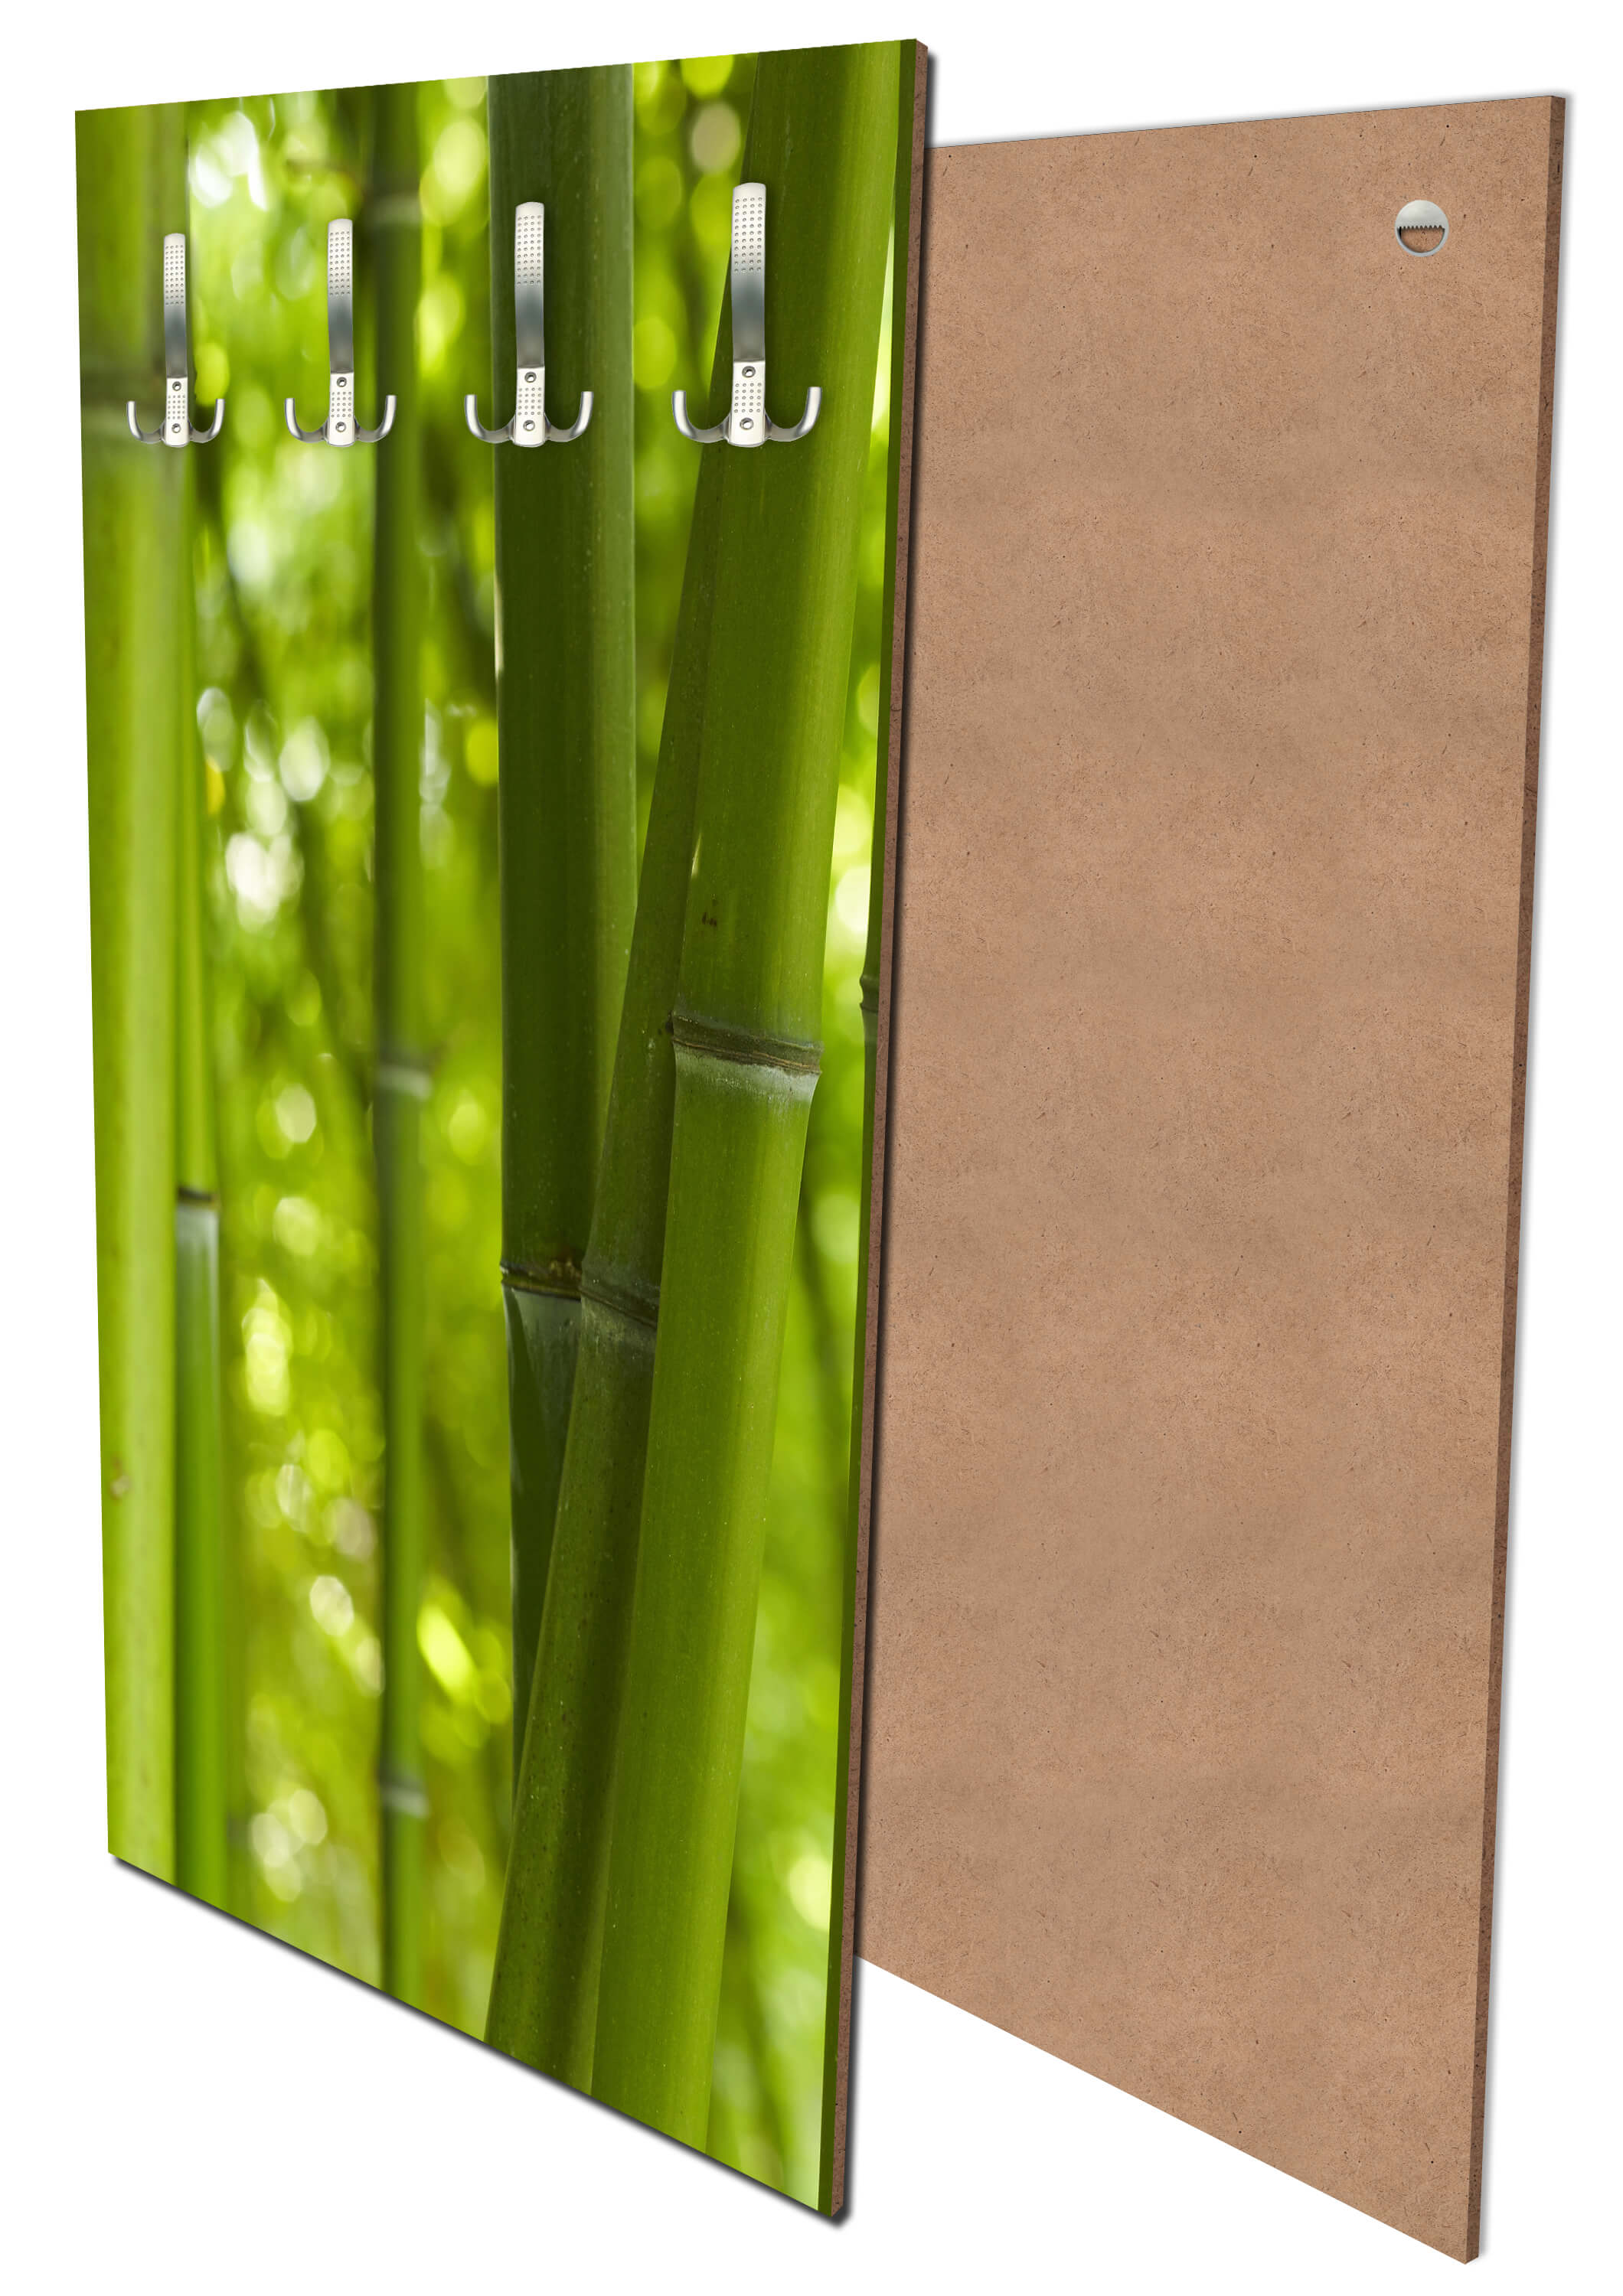 Garderobe Bambus M0003 entdecken - Bild 1